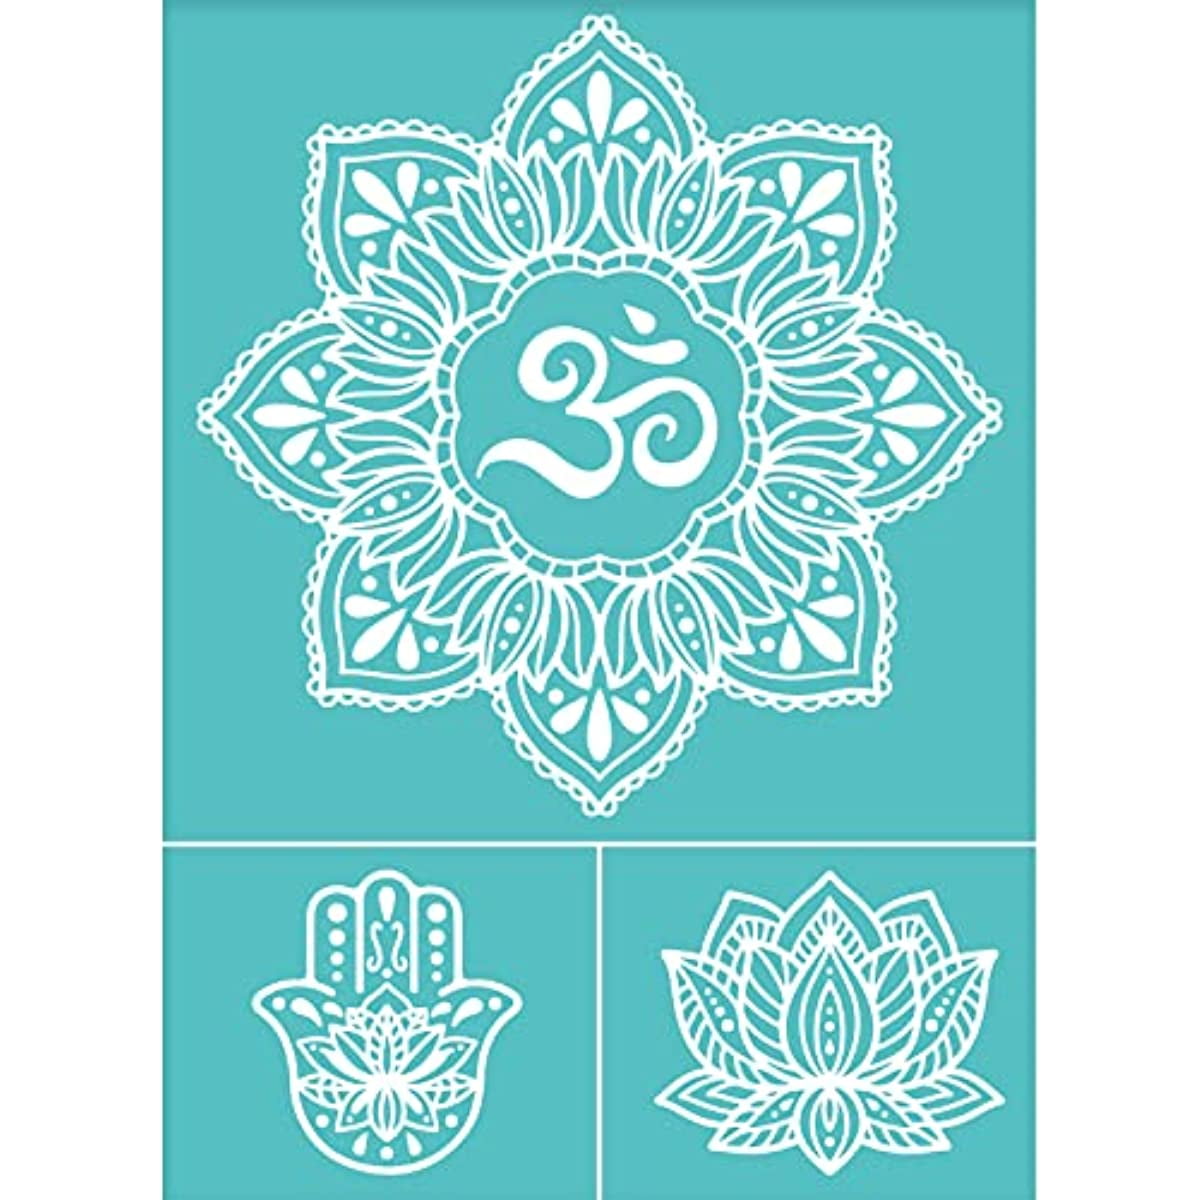 CrafTreat Lotus Mandala Wall Stencils for Painting - Stencil Mandala, Reusable Mandala Pattern 23x23 Inches Online